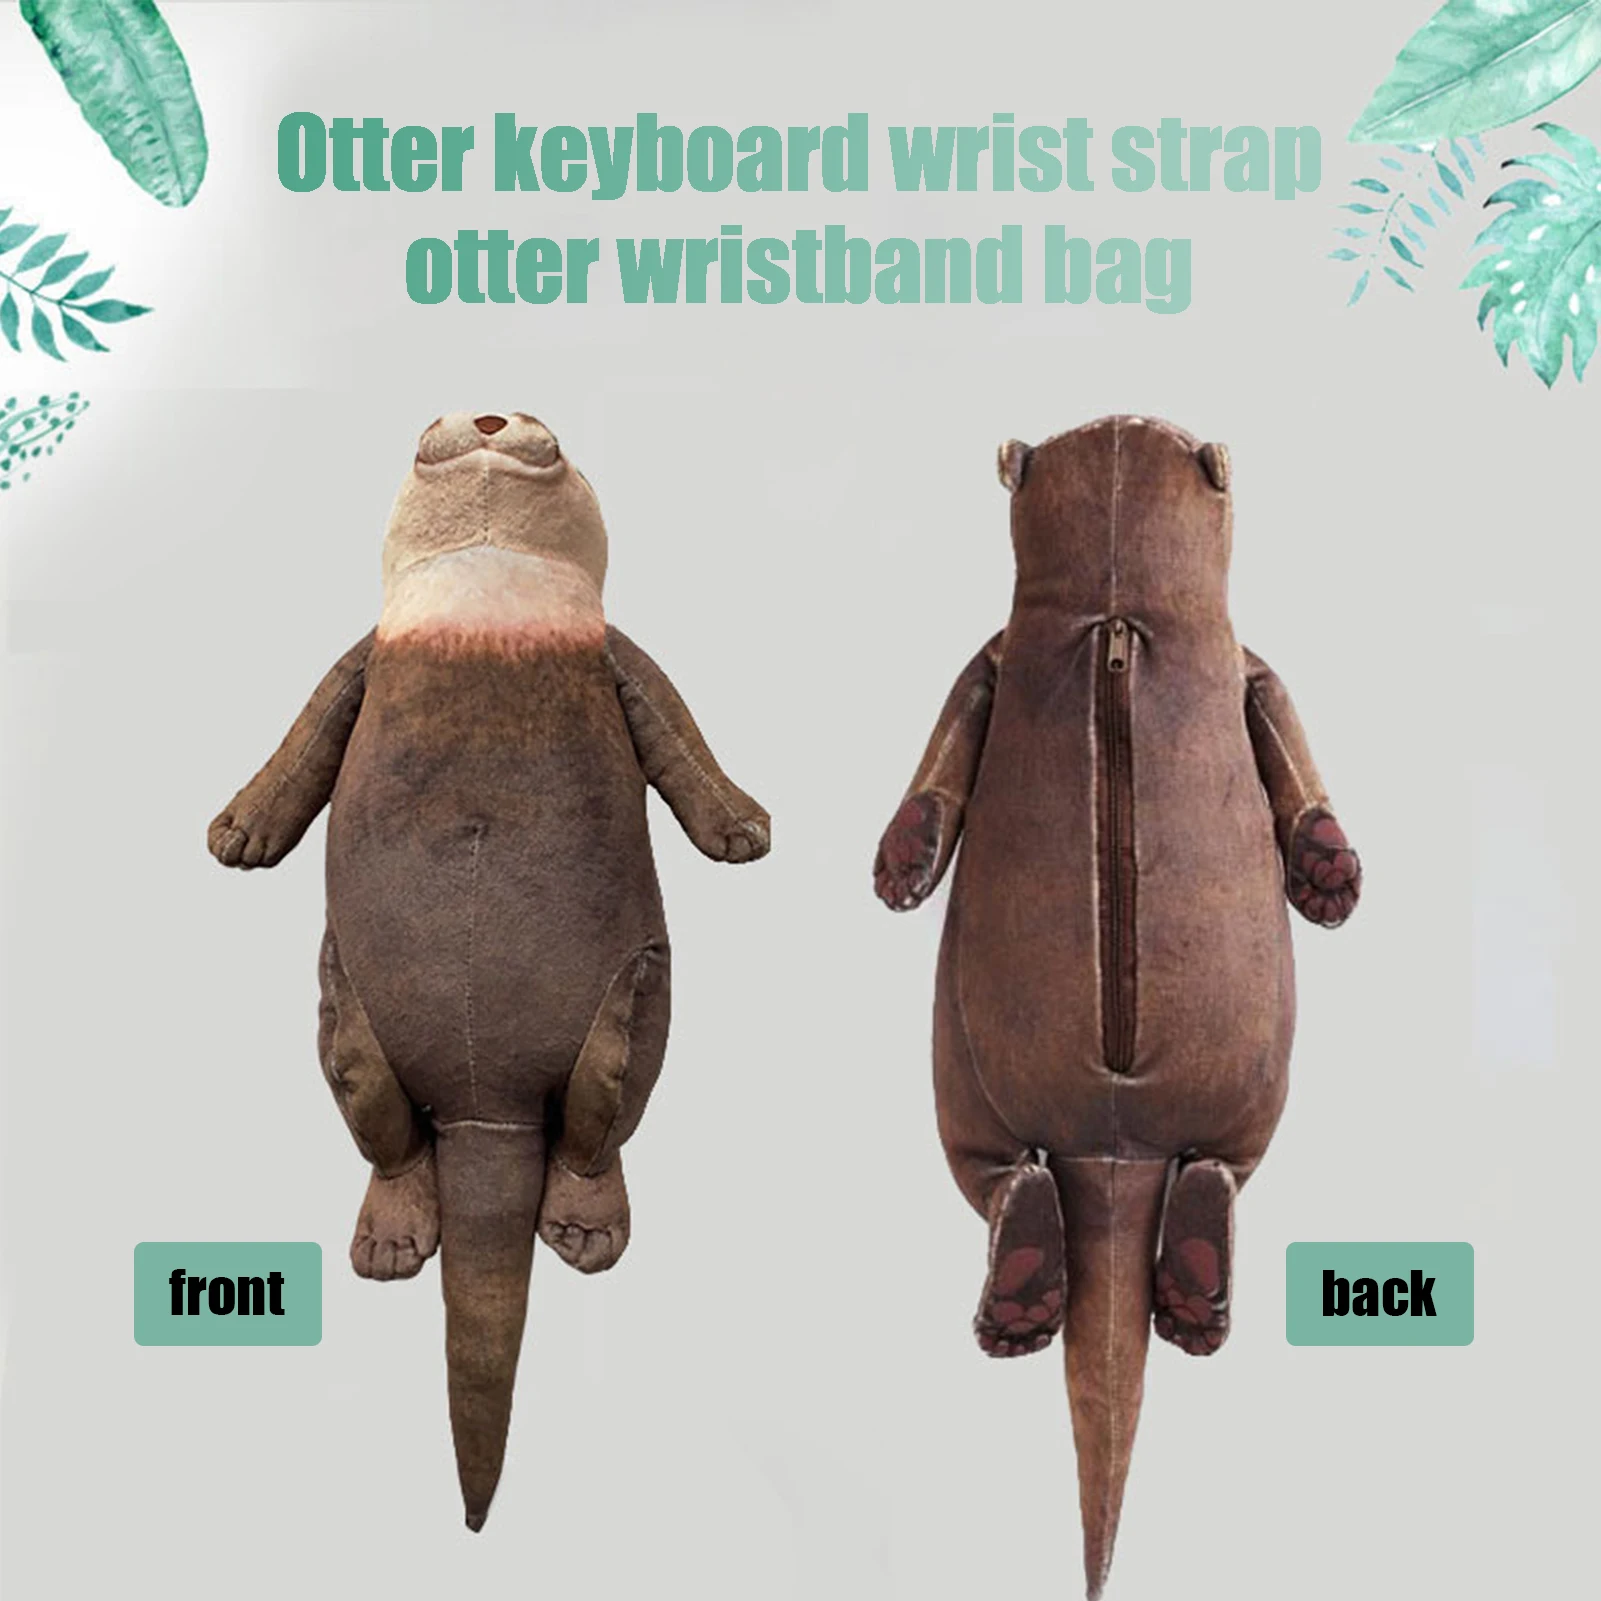 

Cute Otters Cotton Filled Pencil Case Wrist Cushion Pillow Wrist Rest Wrist Rest For Keyboard Mouse Palm Rest Otters Shape Plush